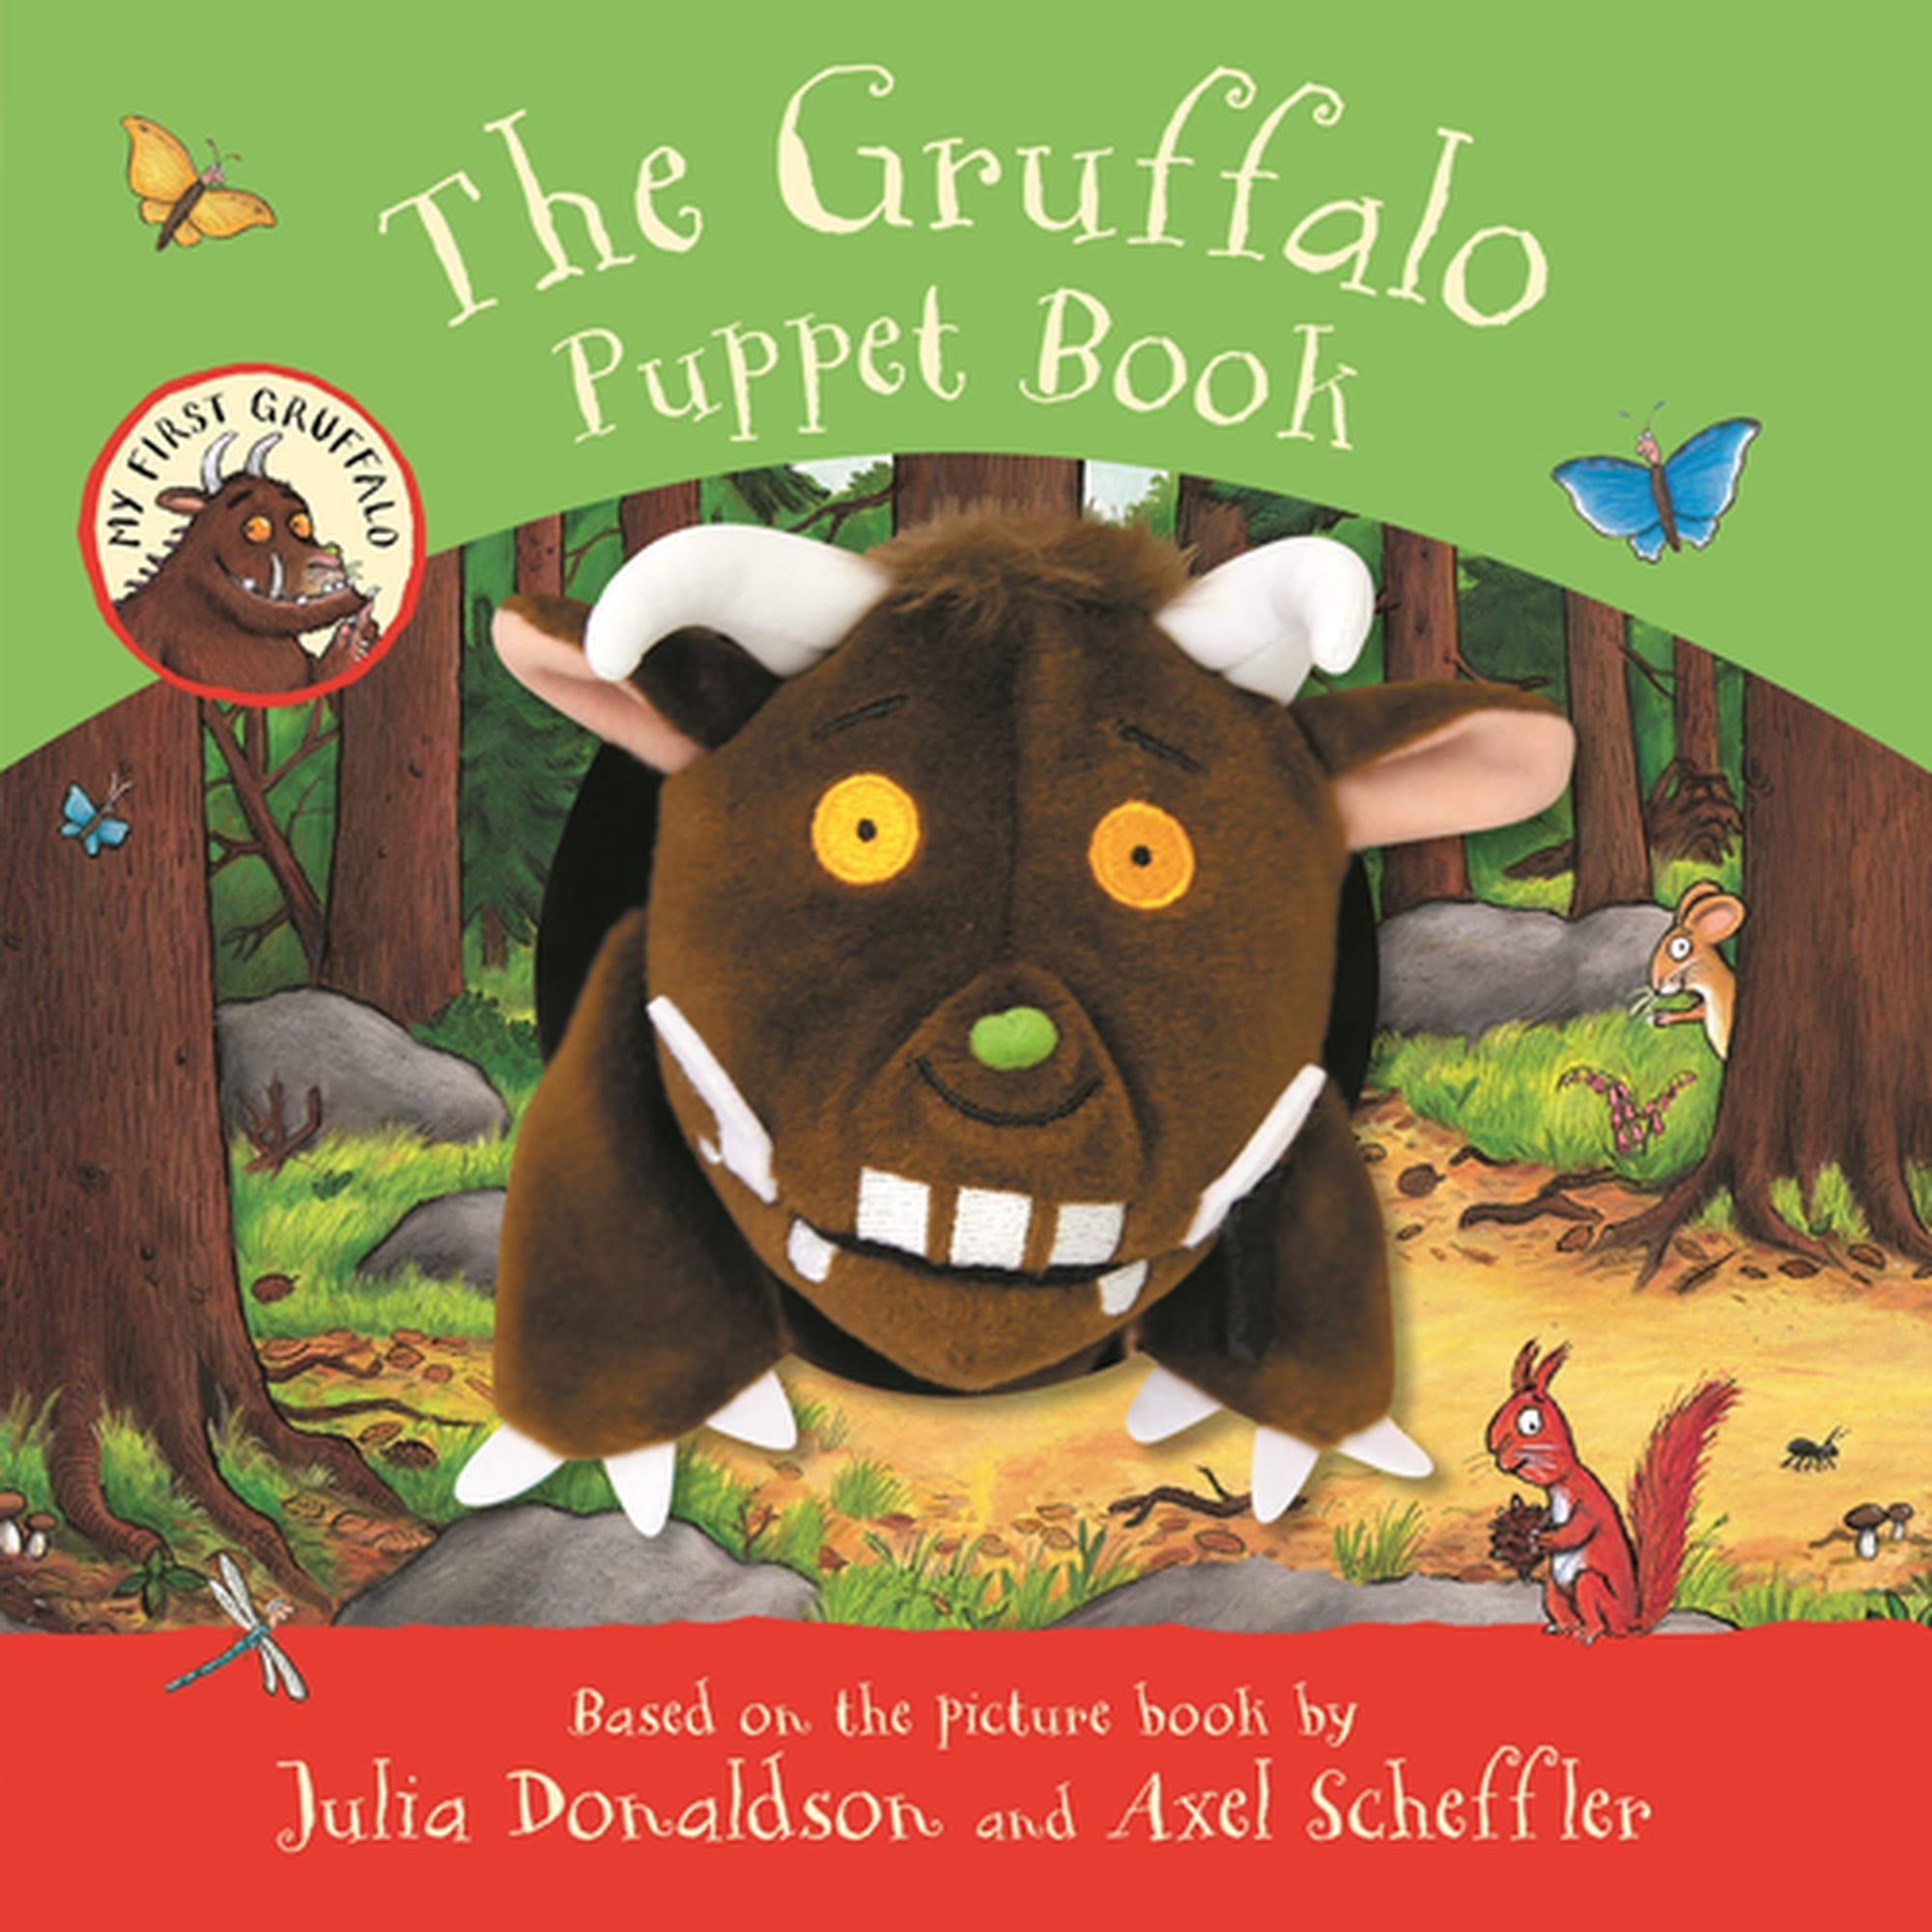 My First Gruffalo: the Gruffalo Puppet Book [Book]